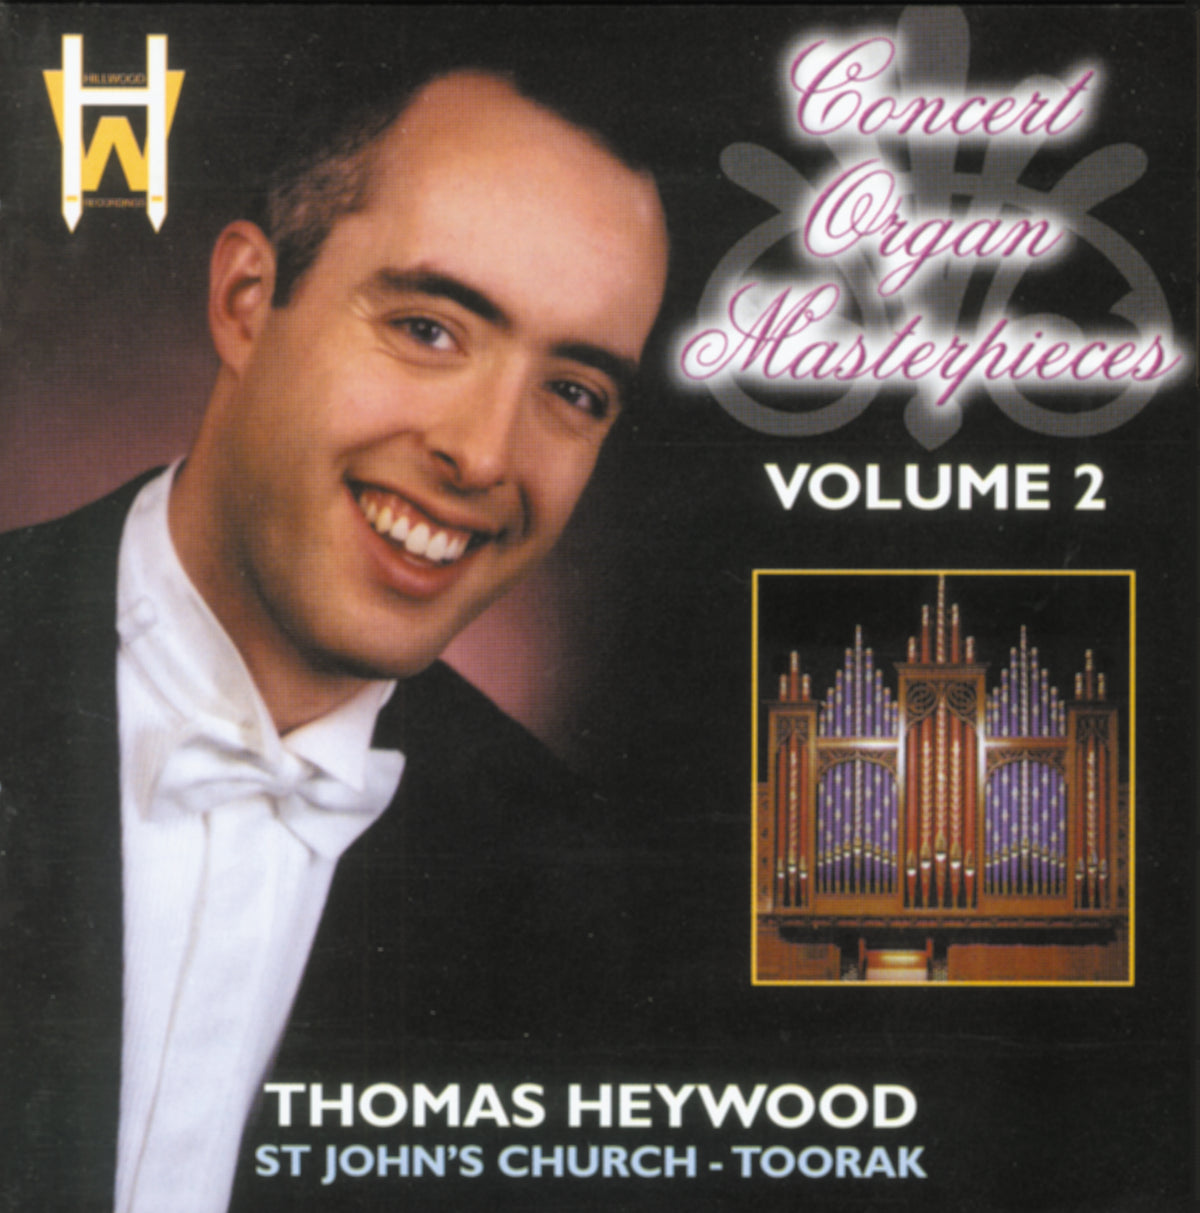 Concert Organ Masterpieces - Volume 2 (MP3 Album) - Concert Organ International